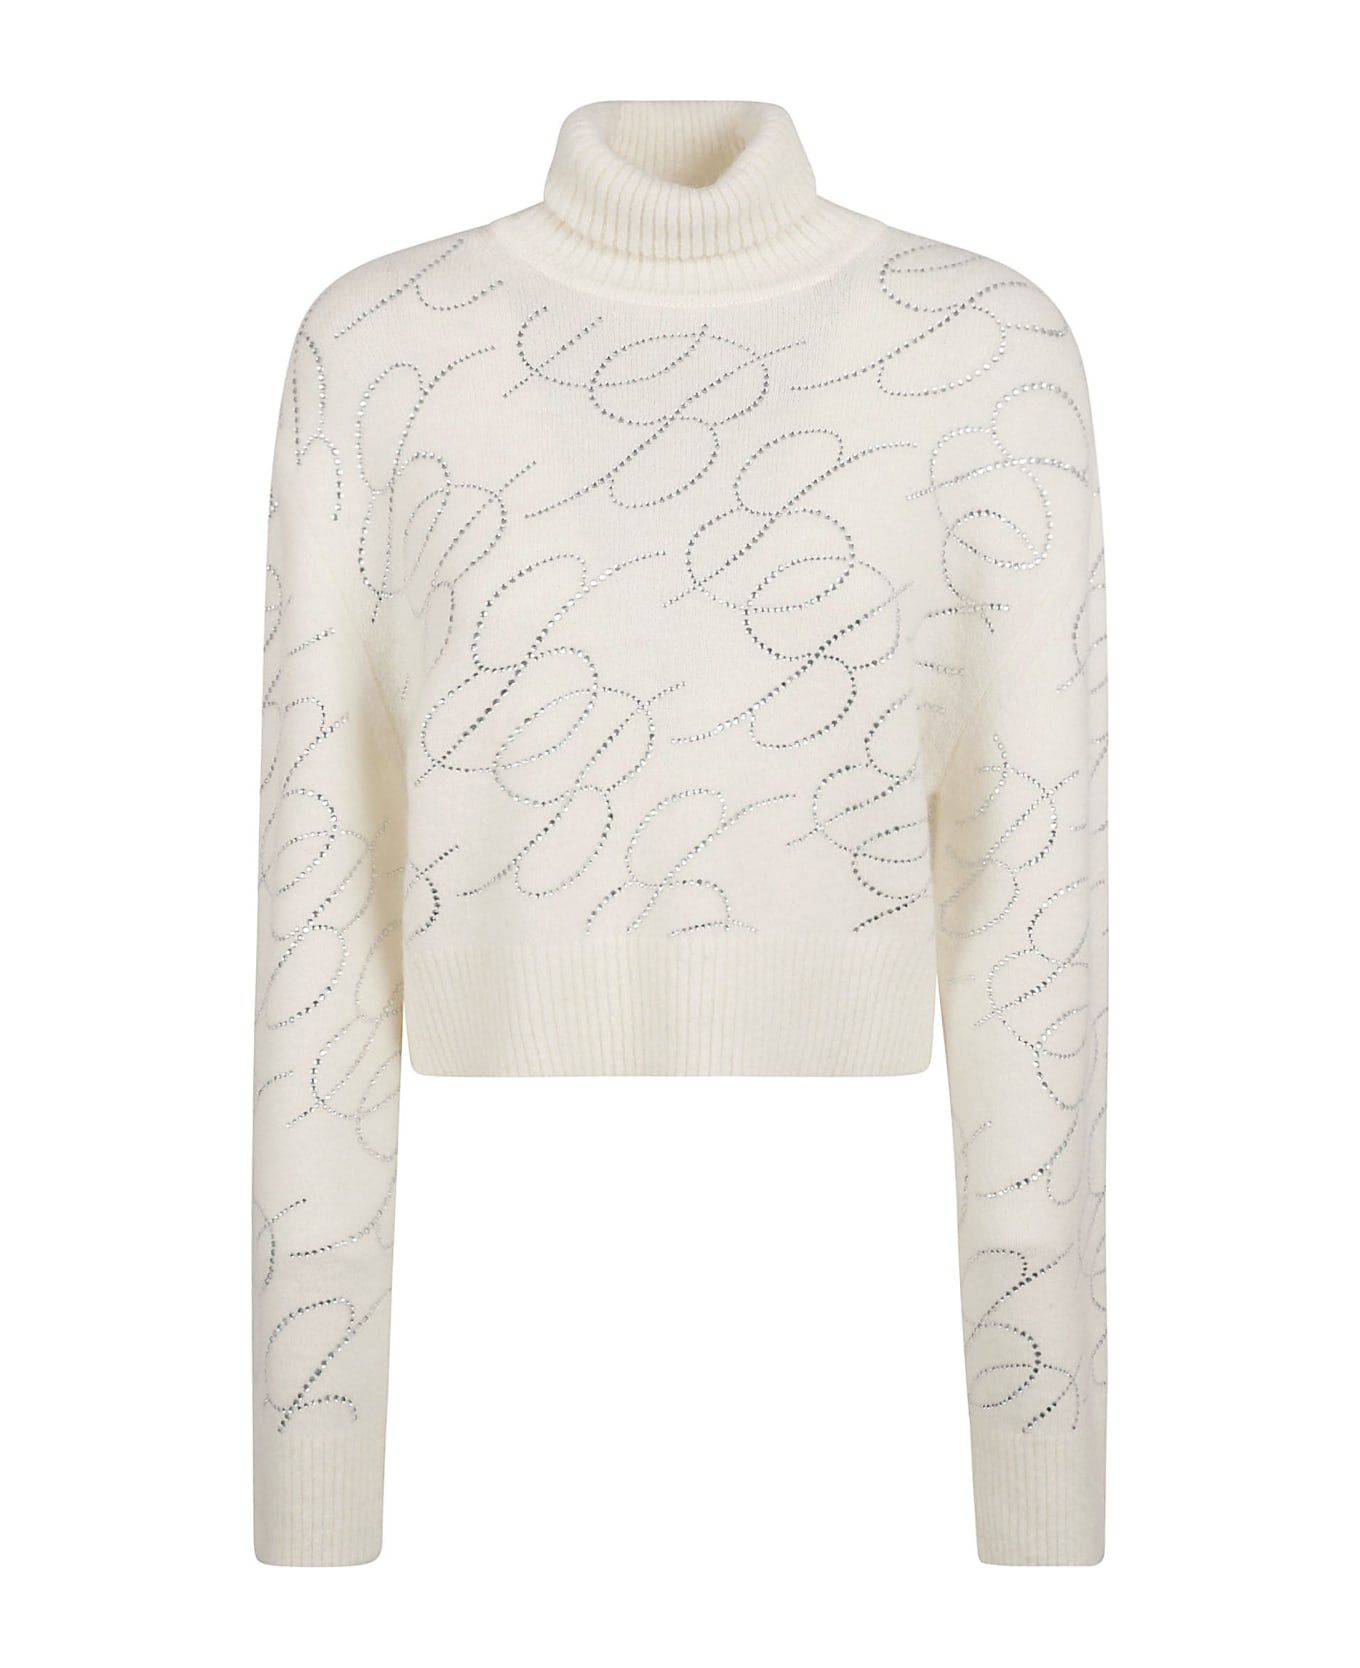 Blumarine Roll Neck Embellished Knit Sweater - White/Natural ニットウェア